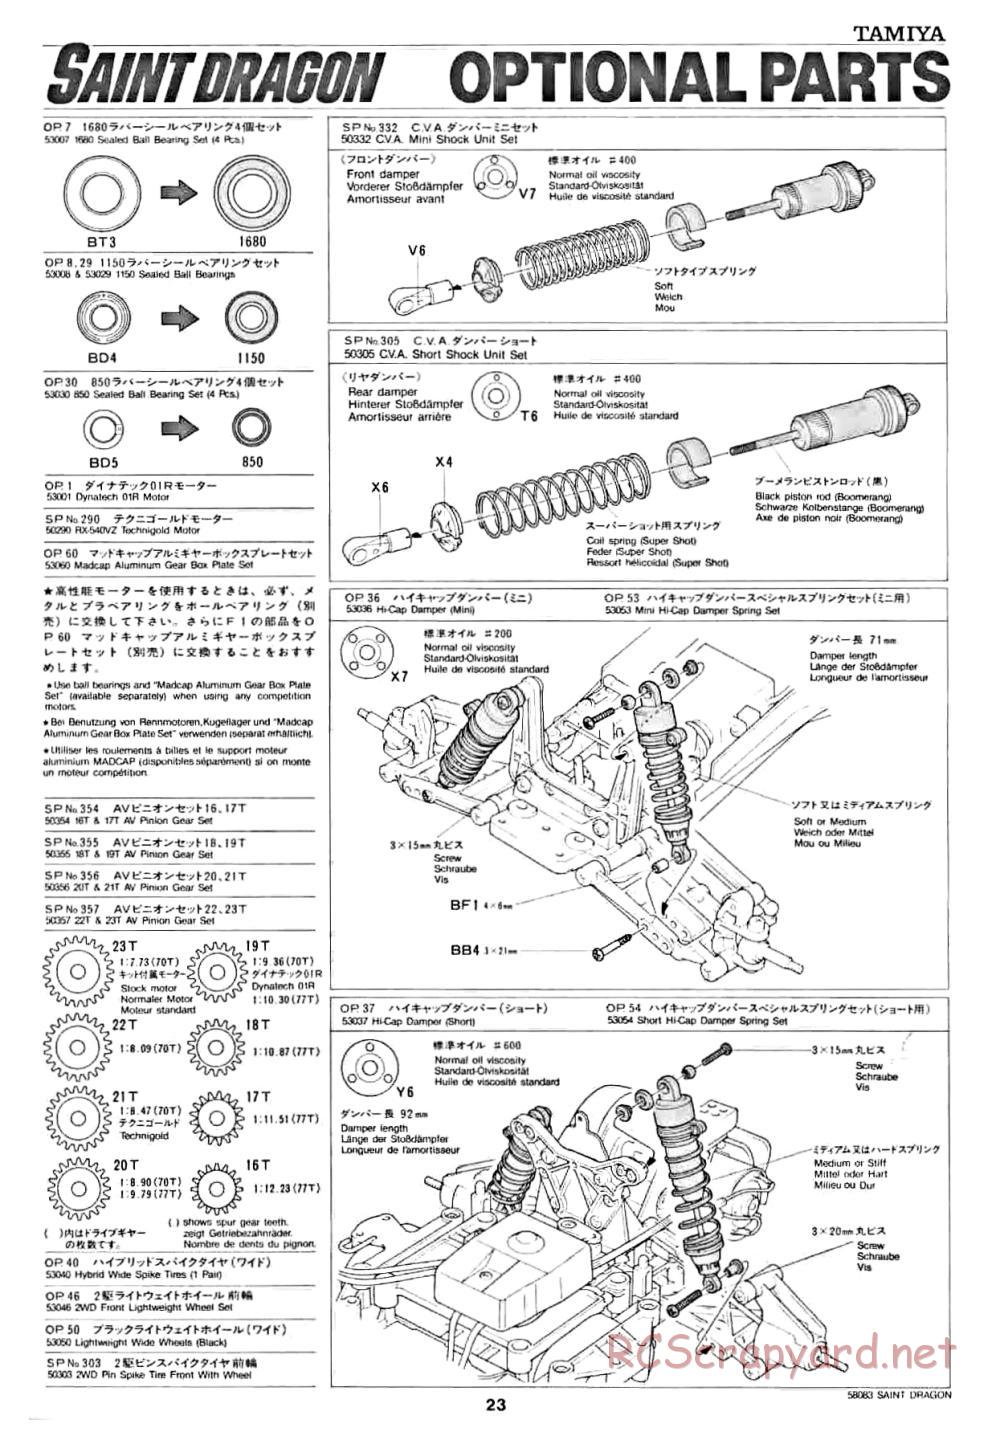 Tamiya - Saint Dragon - 58083 - Manual - Page 23